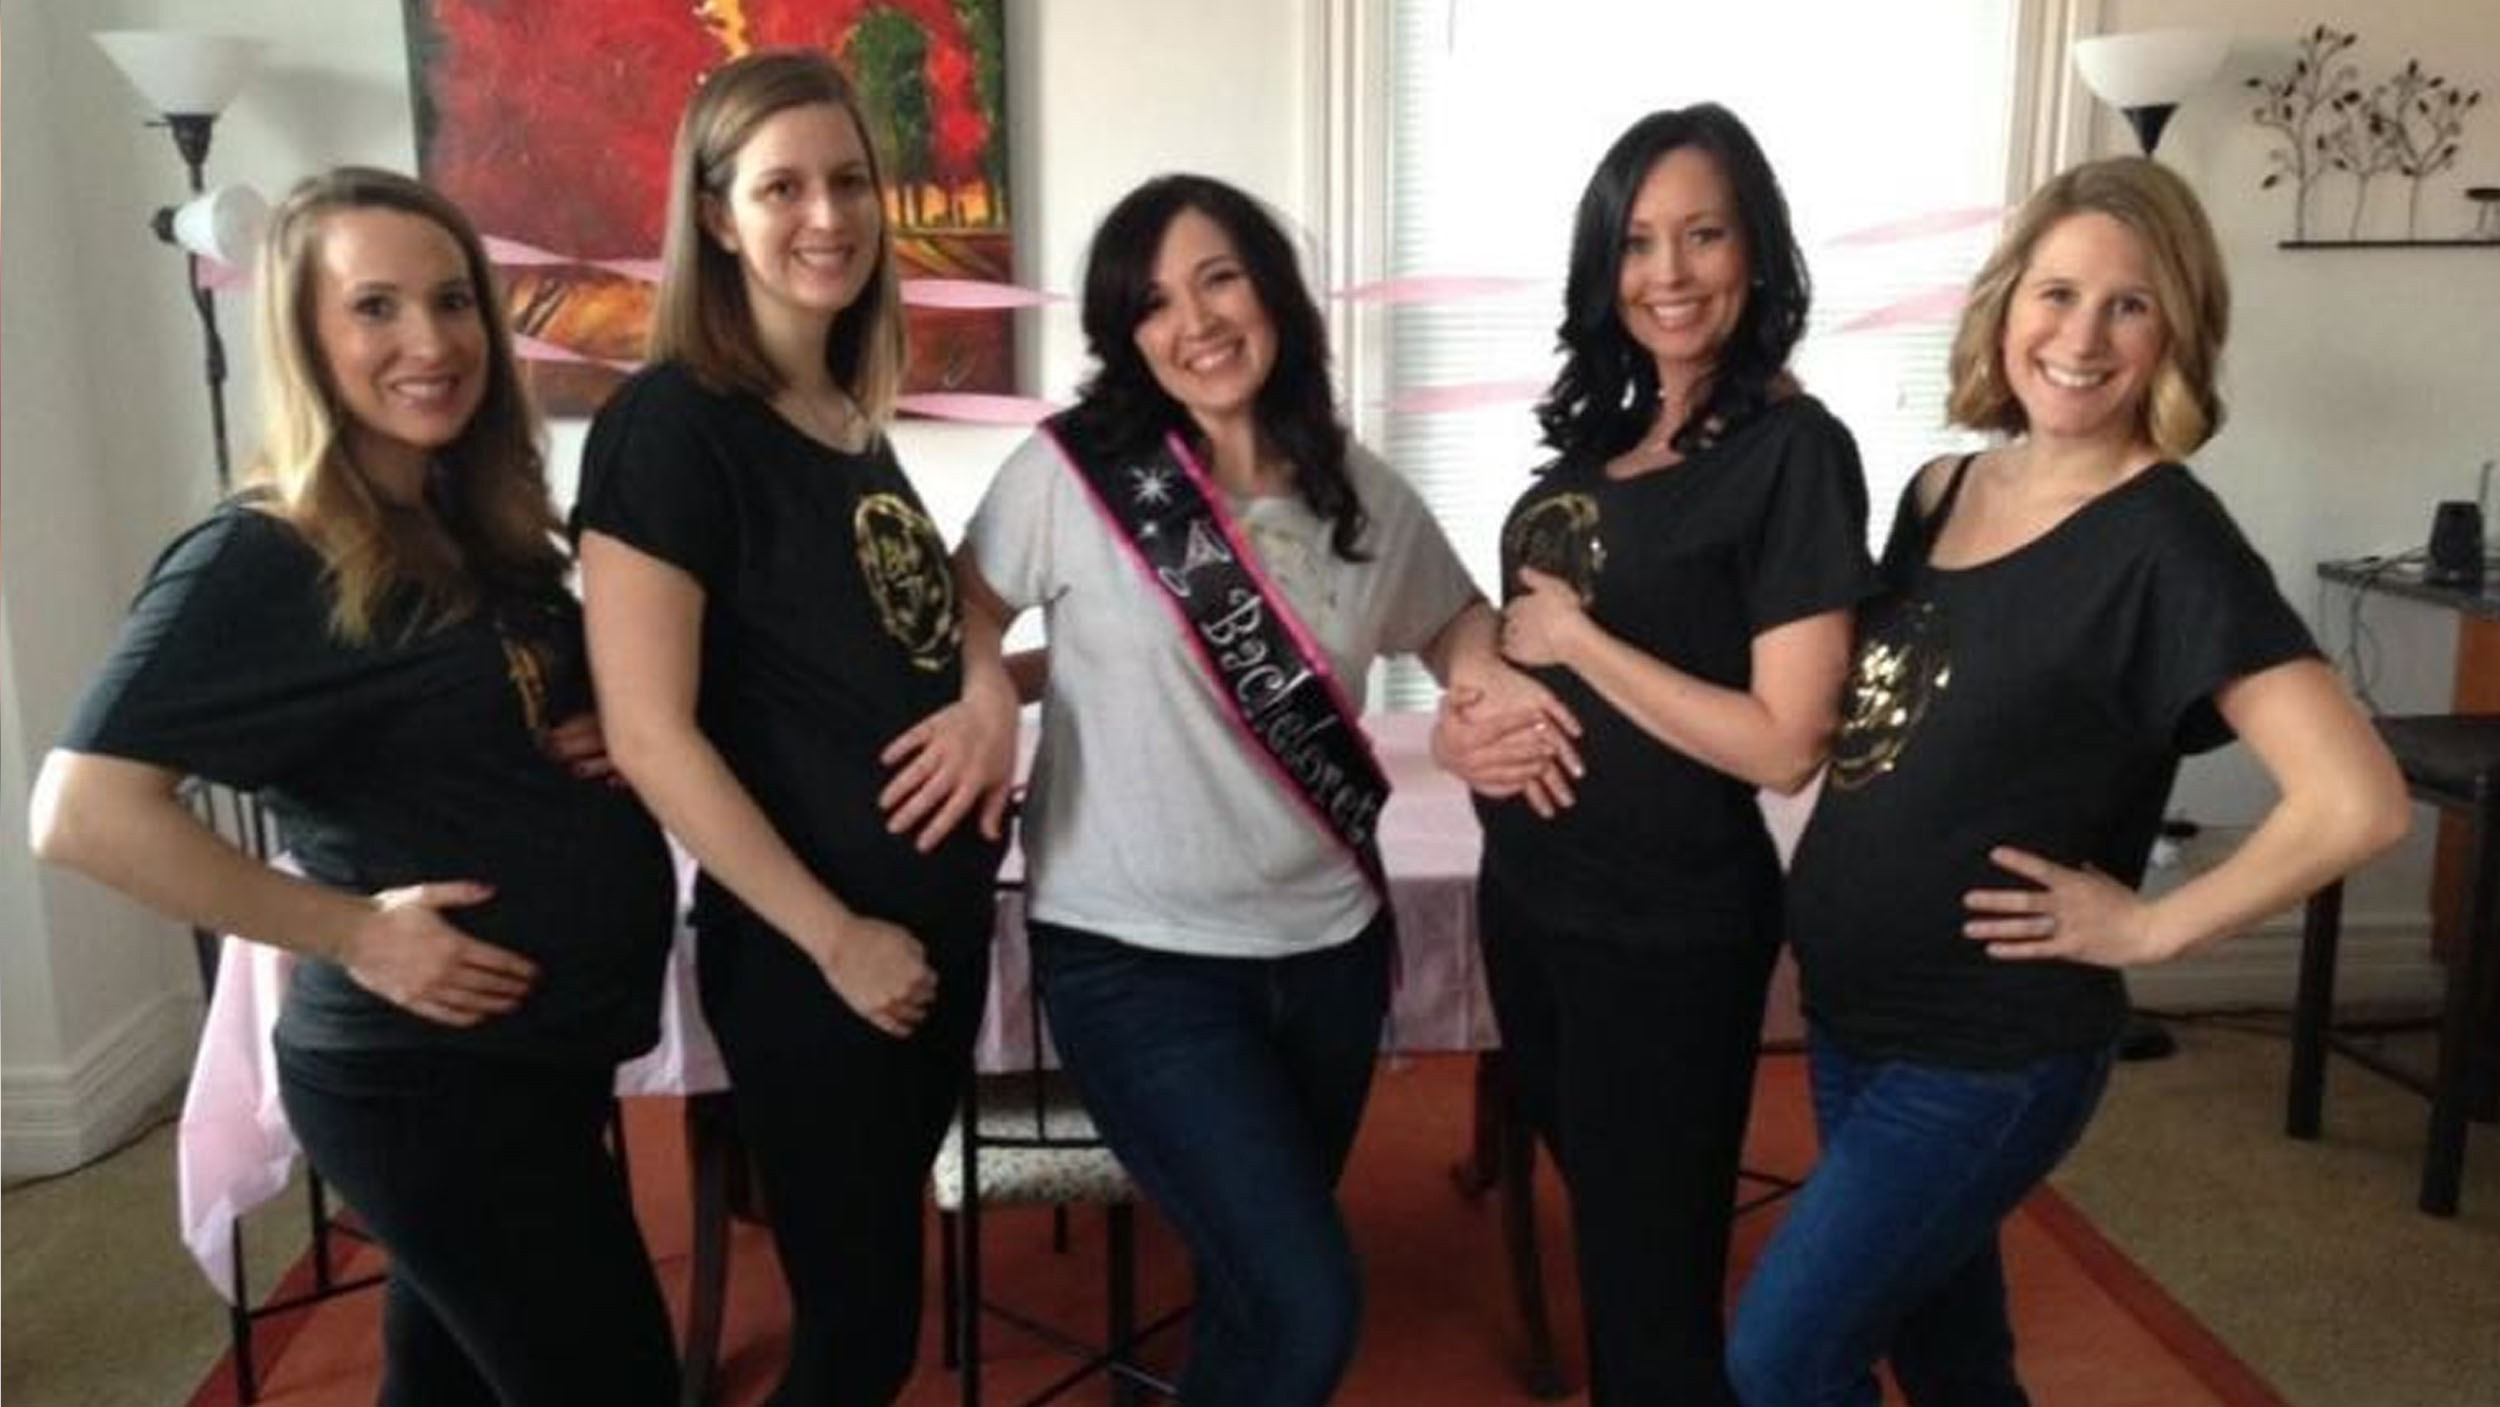 Bachelorette Party Ideas For Pregnant Brides
 Meet the bride whose 5 bridesmaids are all pregnant